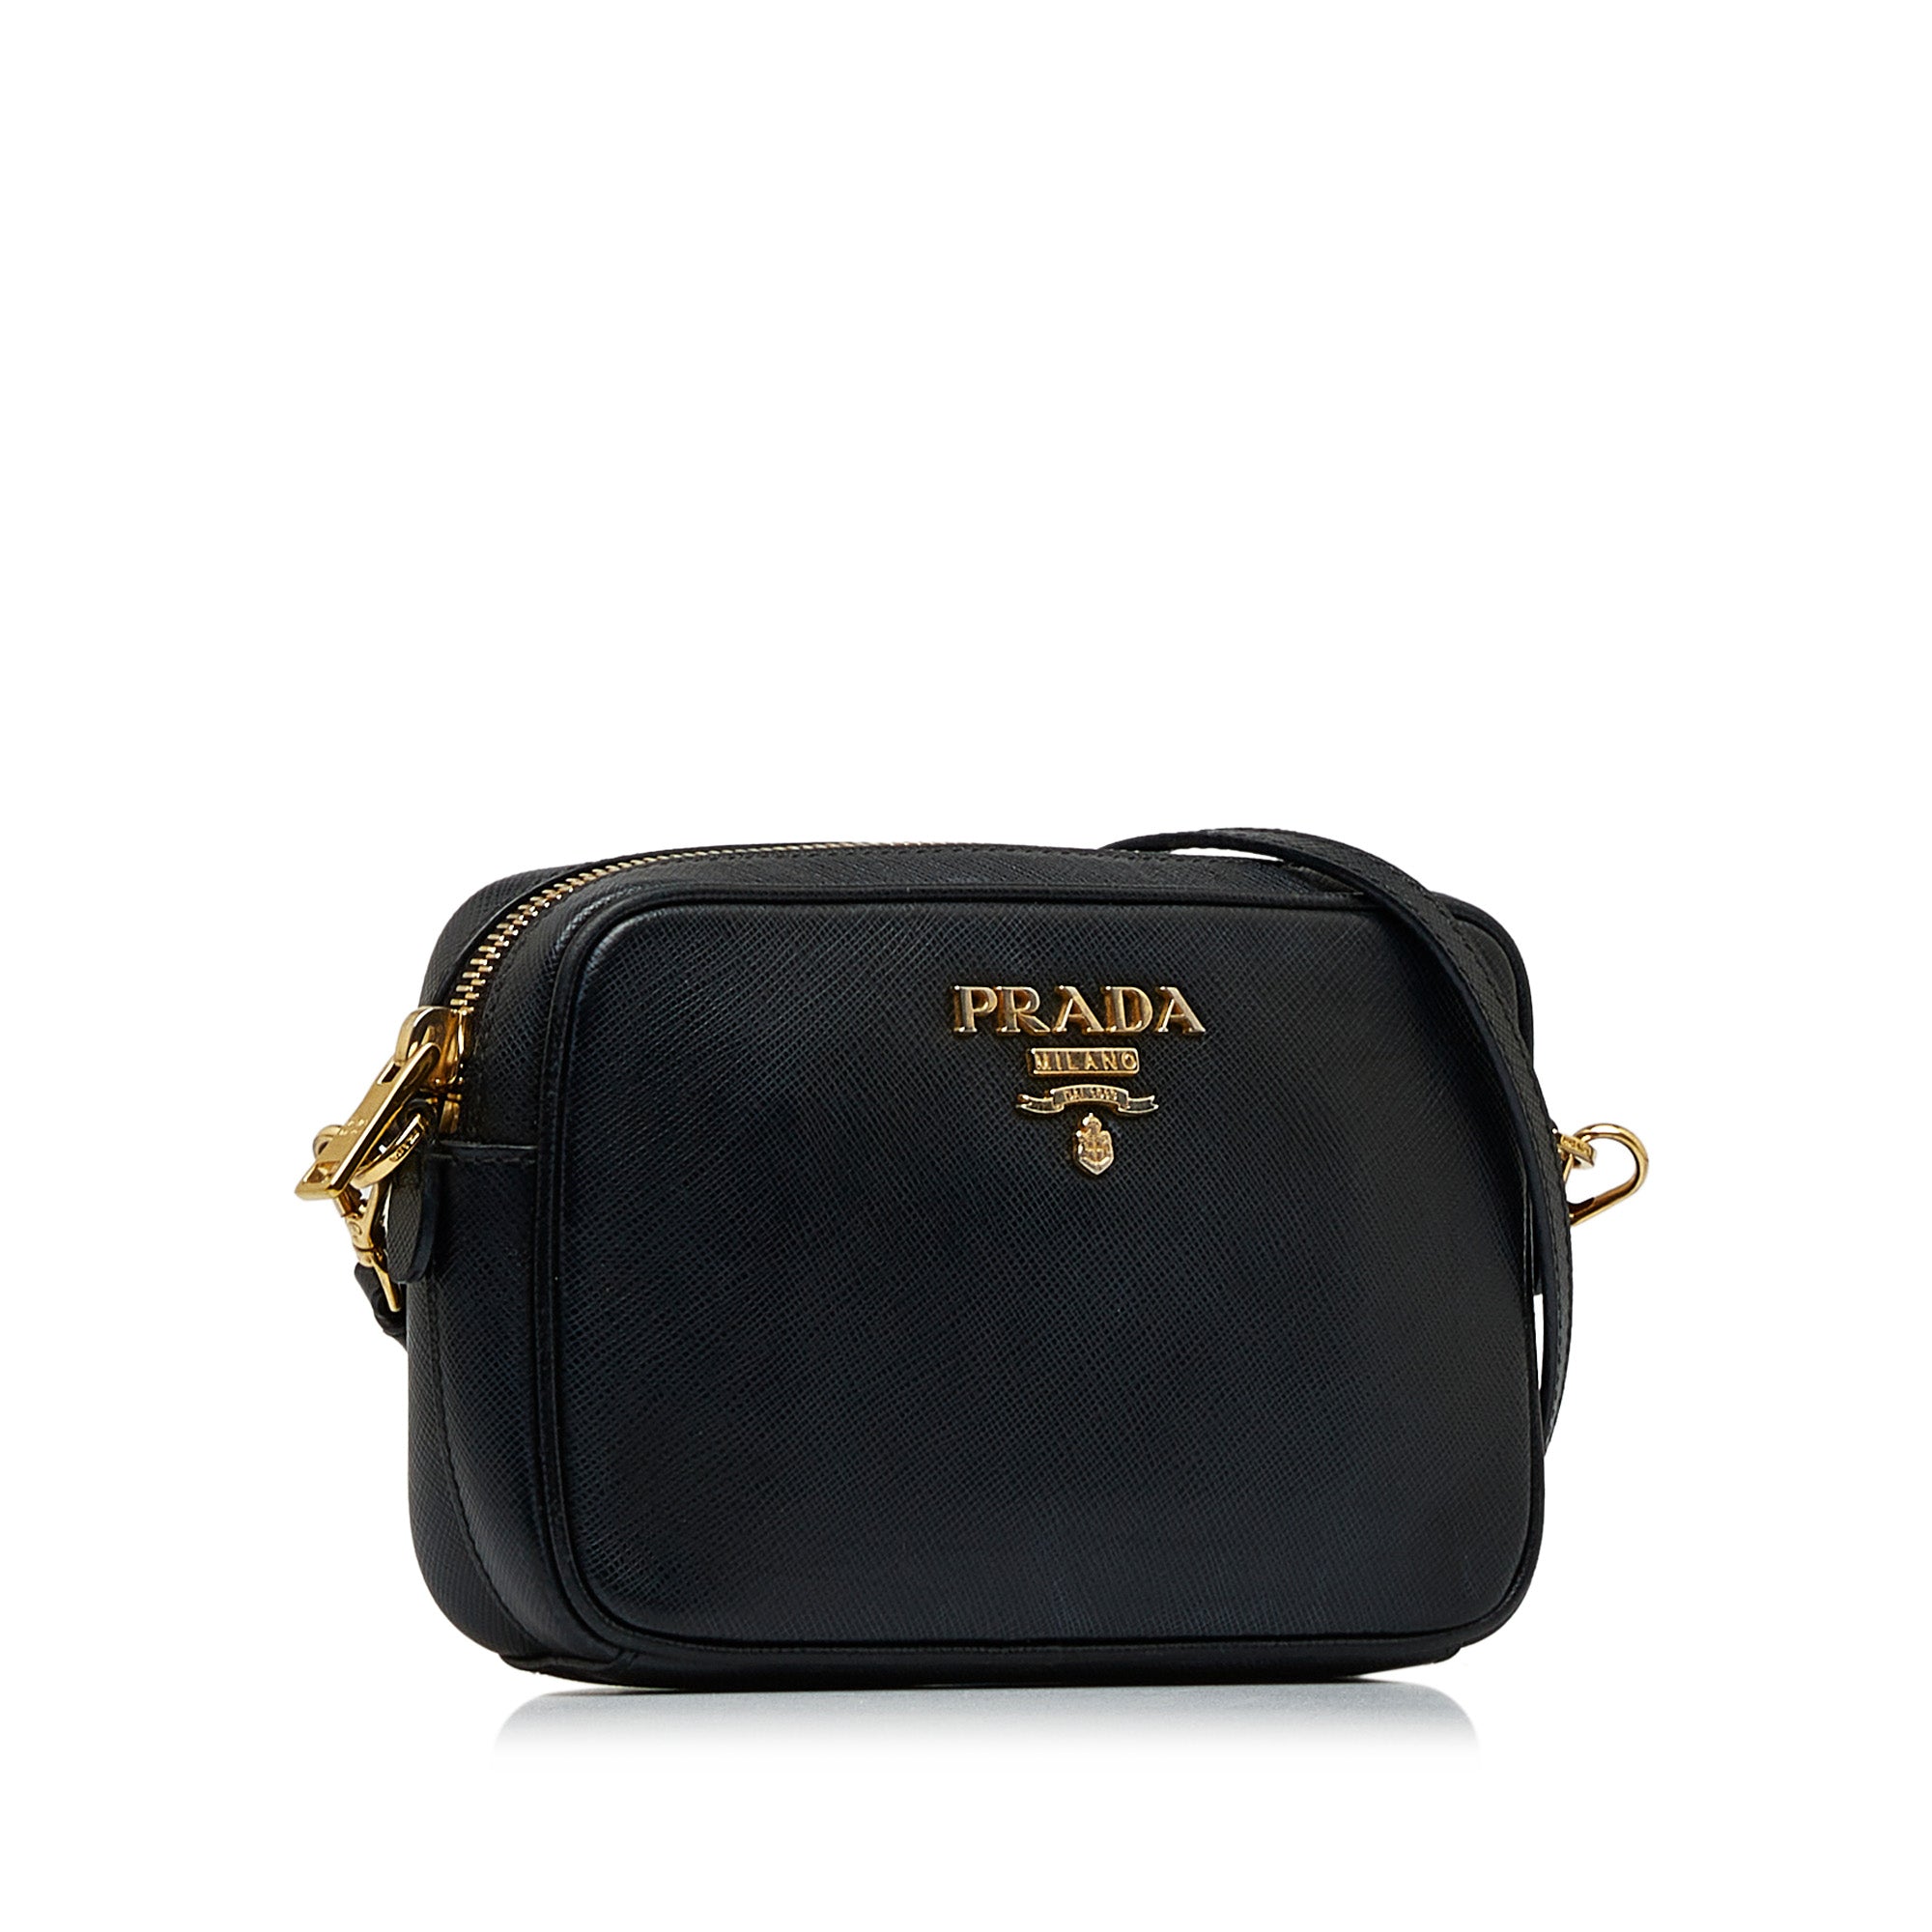 Prada Camera Bag in Black